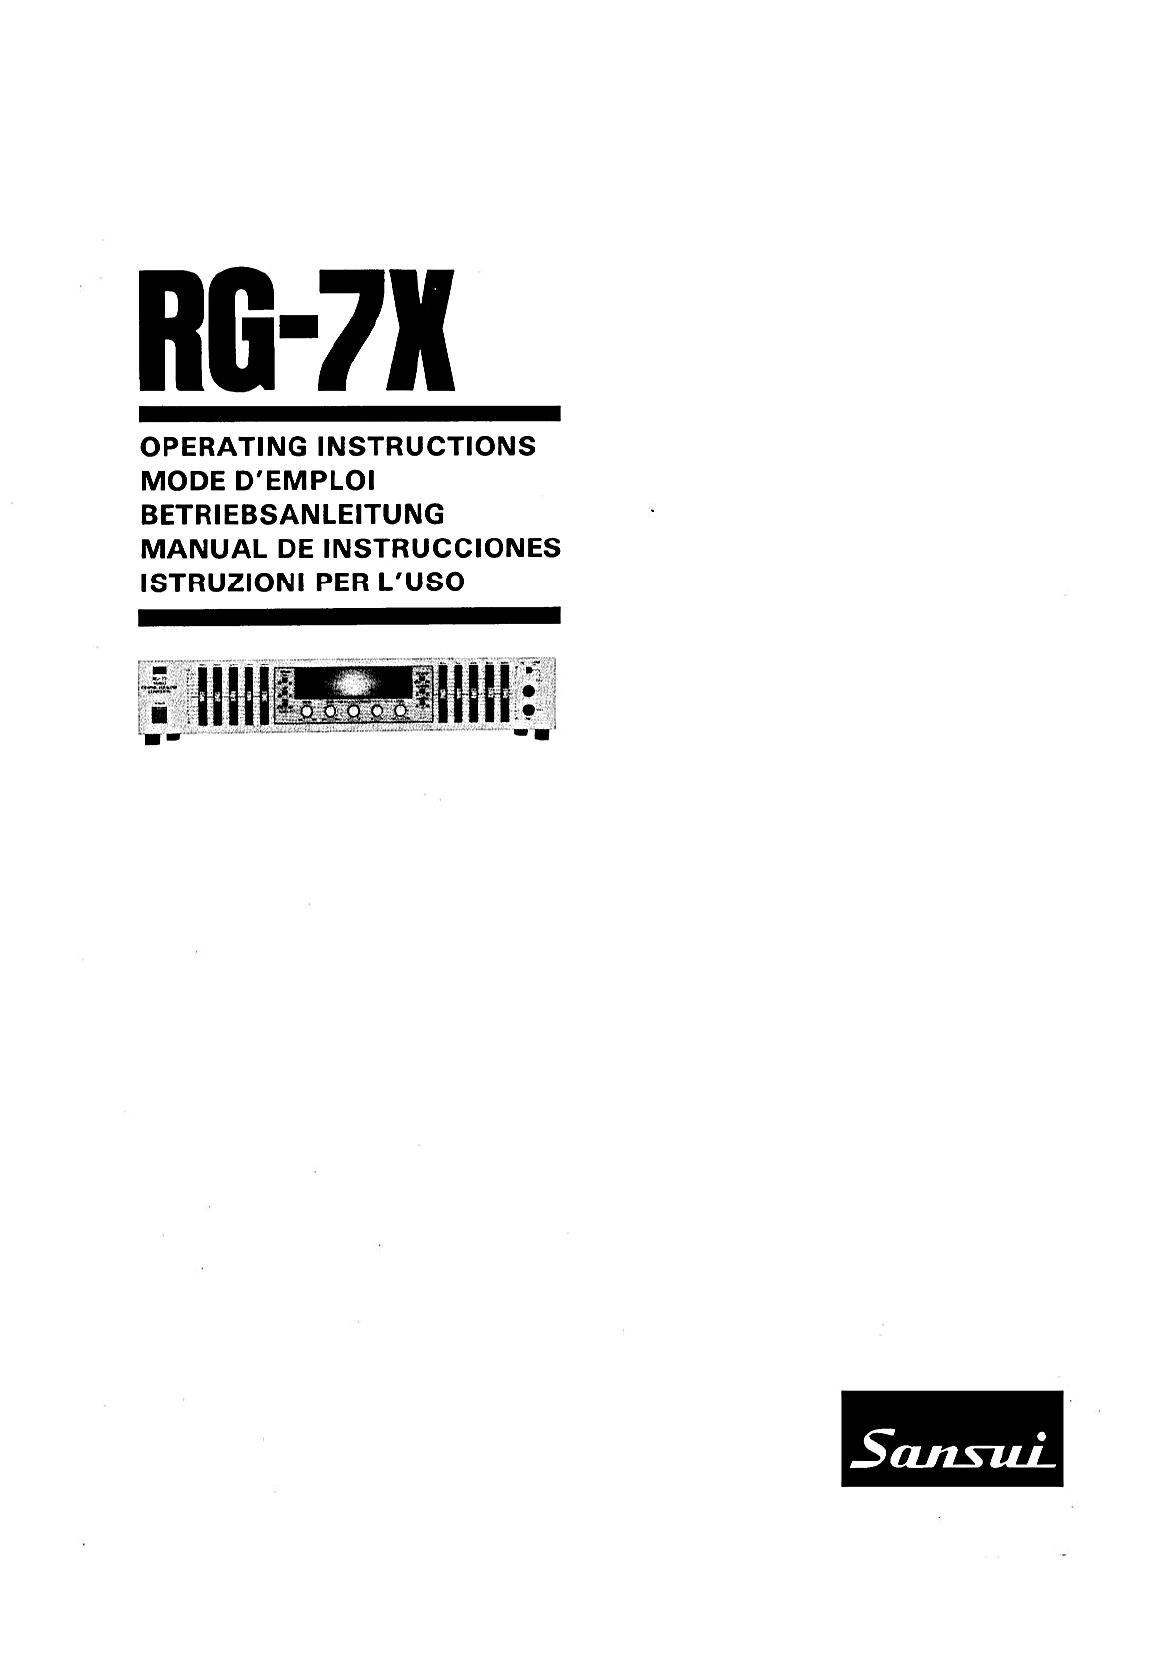 Sansui RG 7X Owners Manual